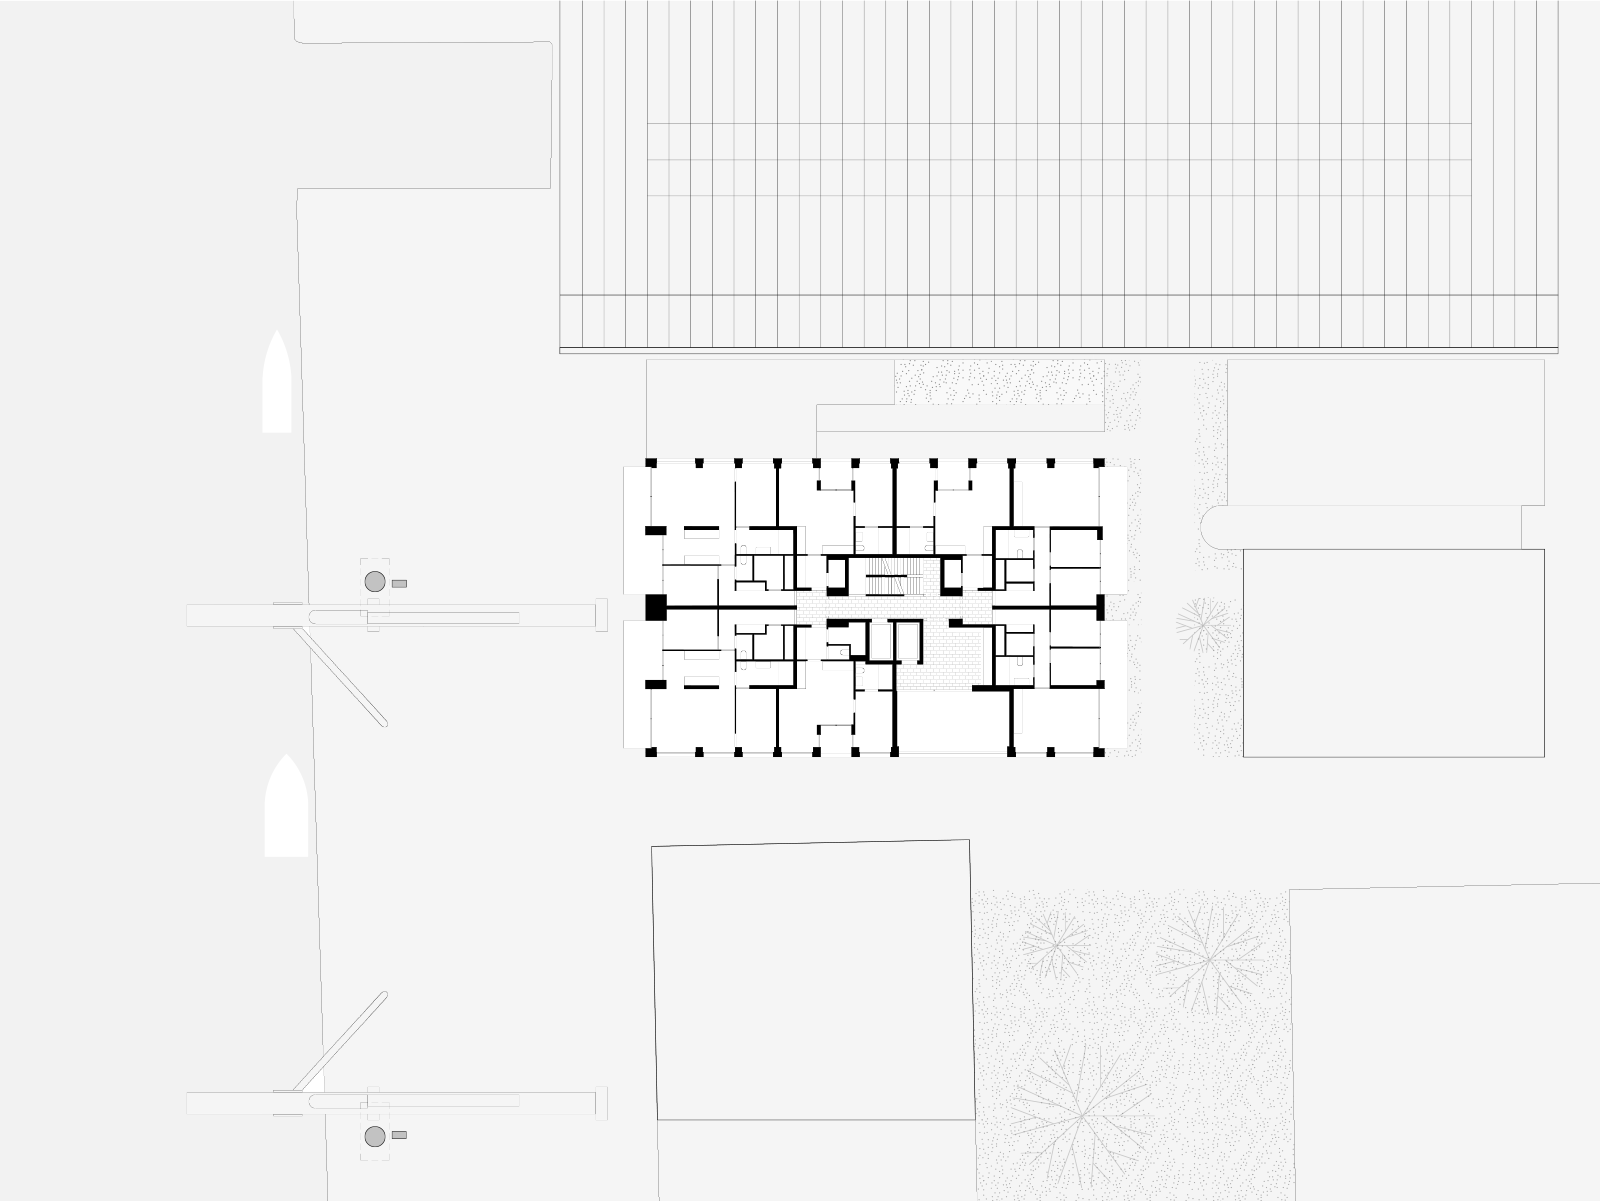 drawing plan ninth floor Oostenburg apartment block by beta architect amsterdam evert klinkenberg gus auguste van oppen